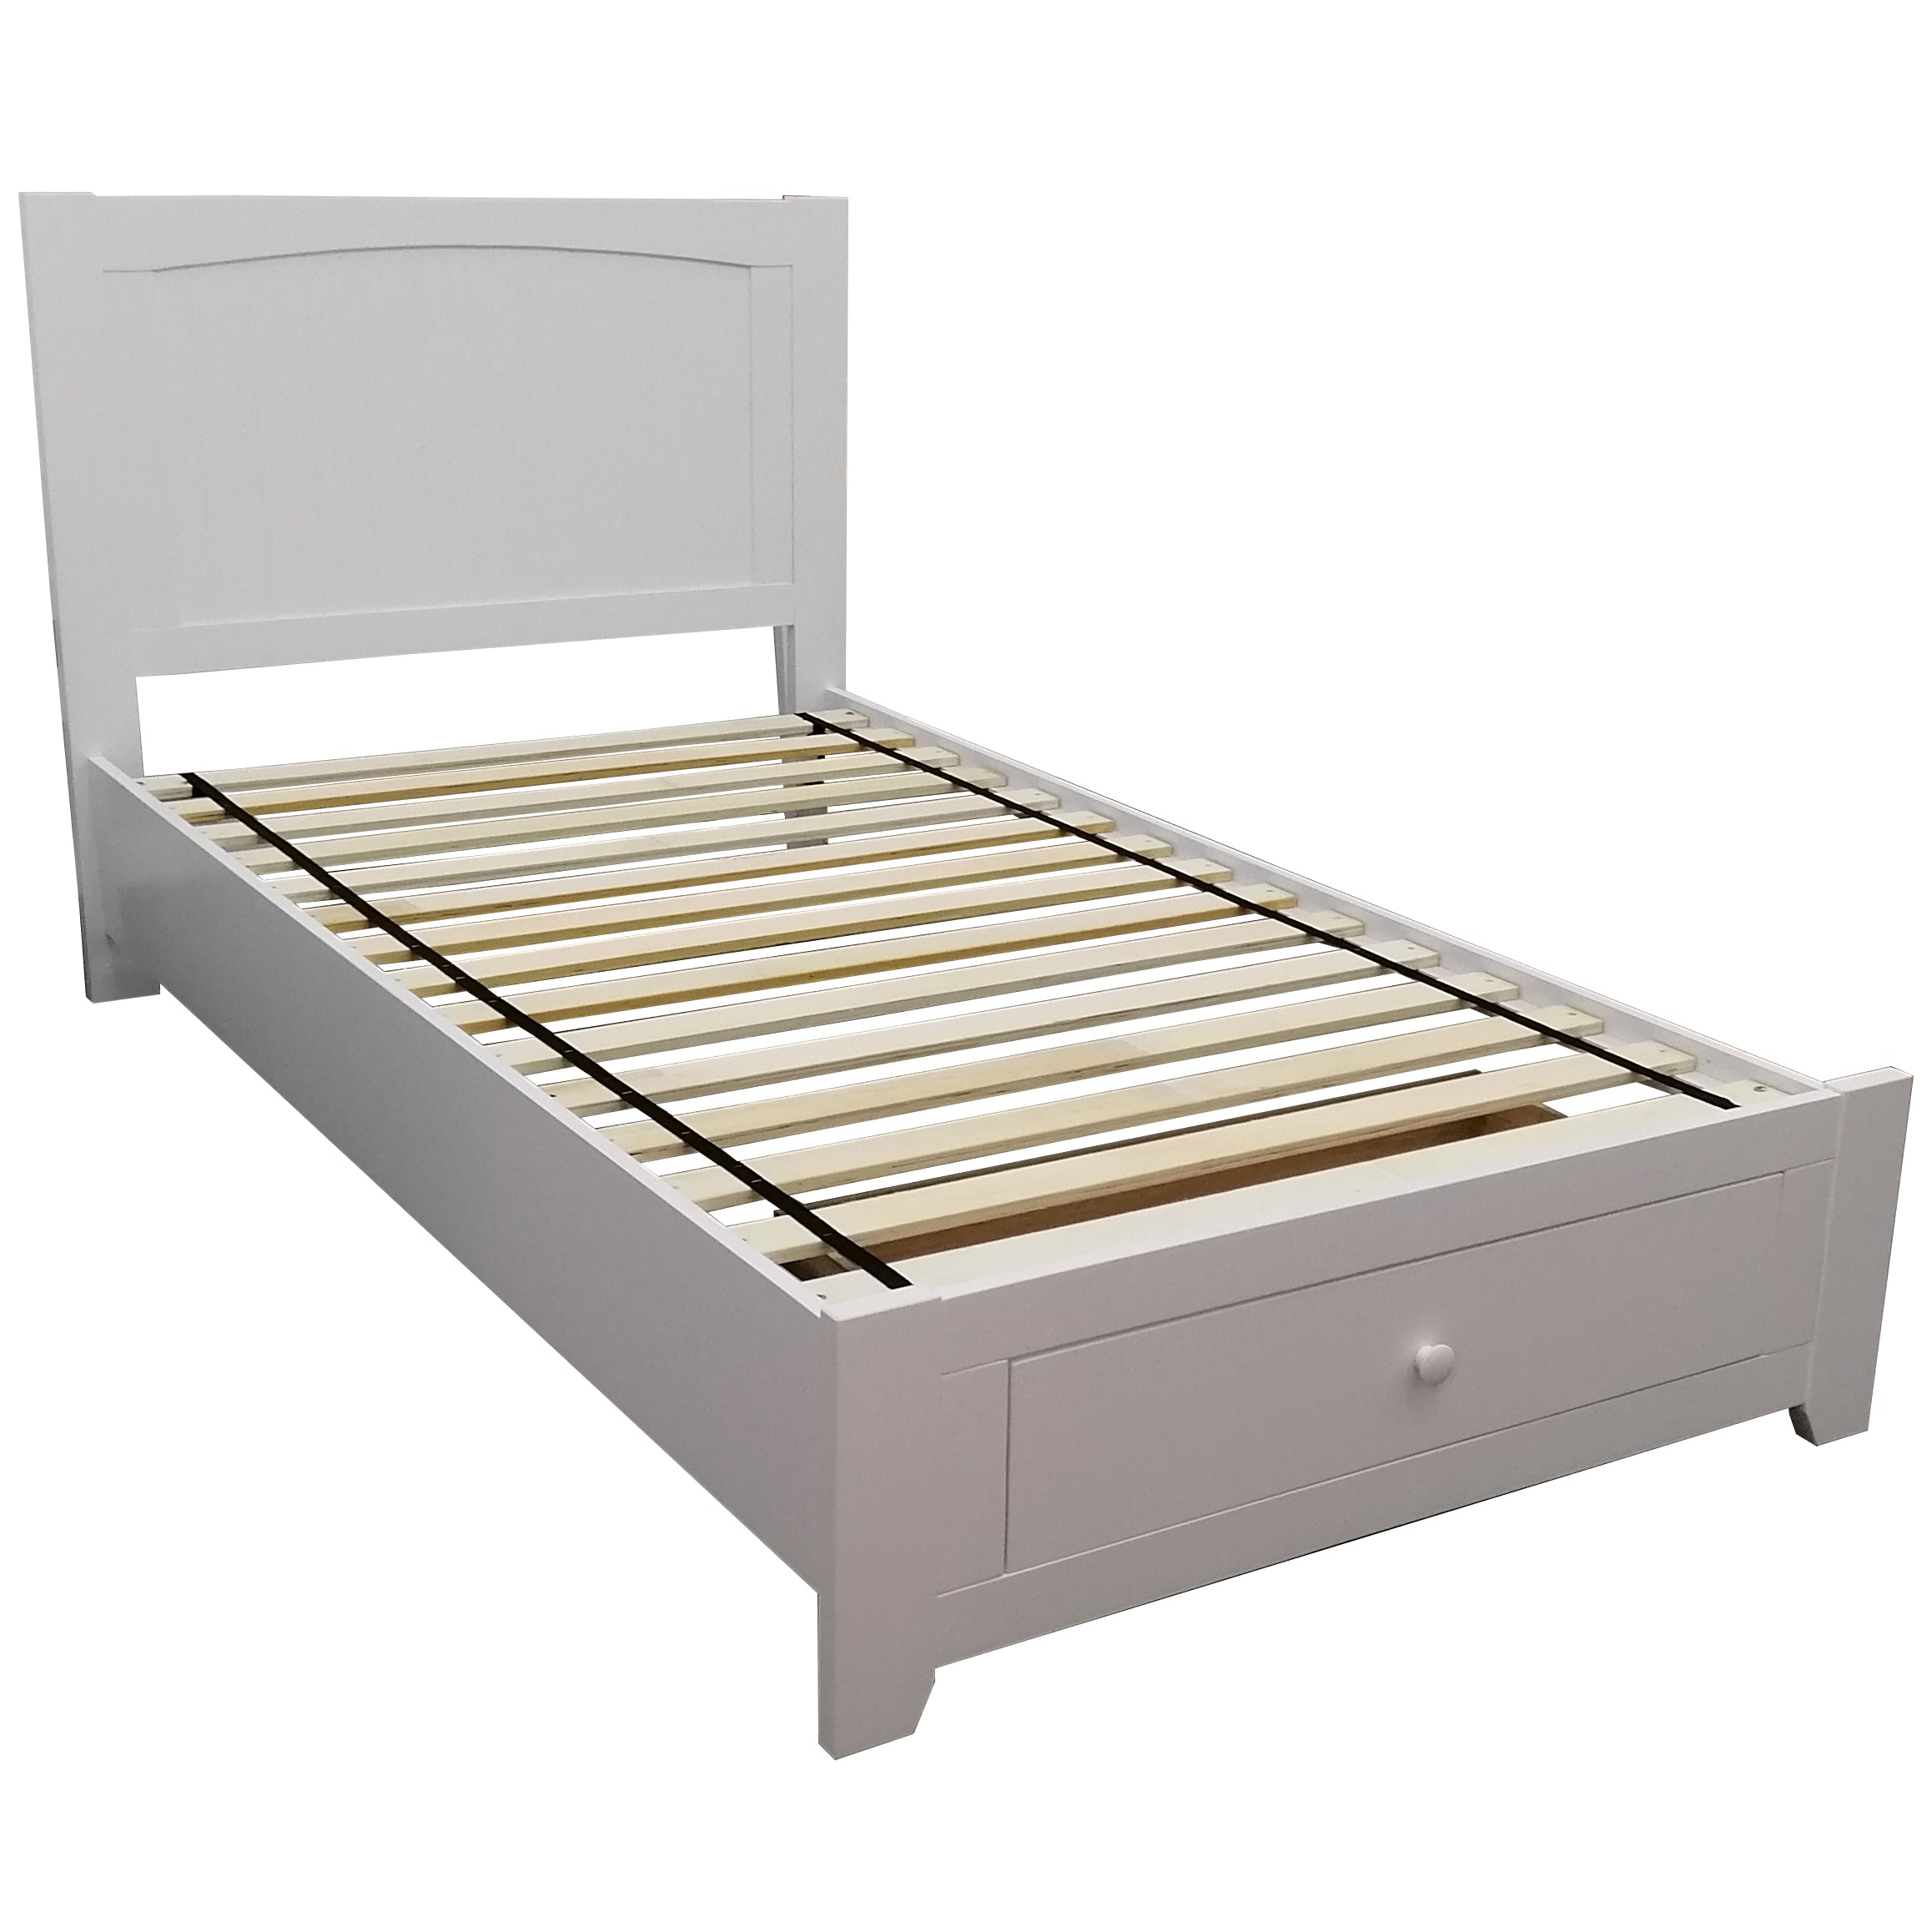 Elegant 4pc King Single Bed Suite with Bedside and Tallboy - White Bedroom Furniture Set